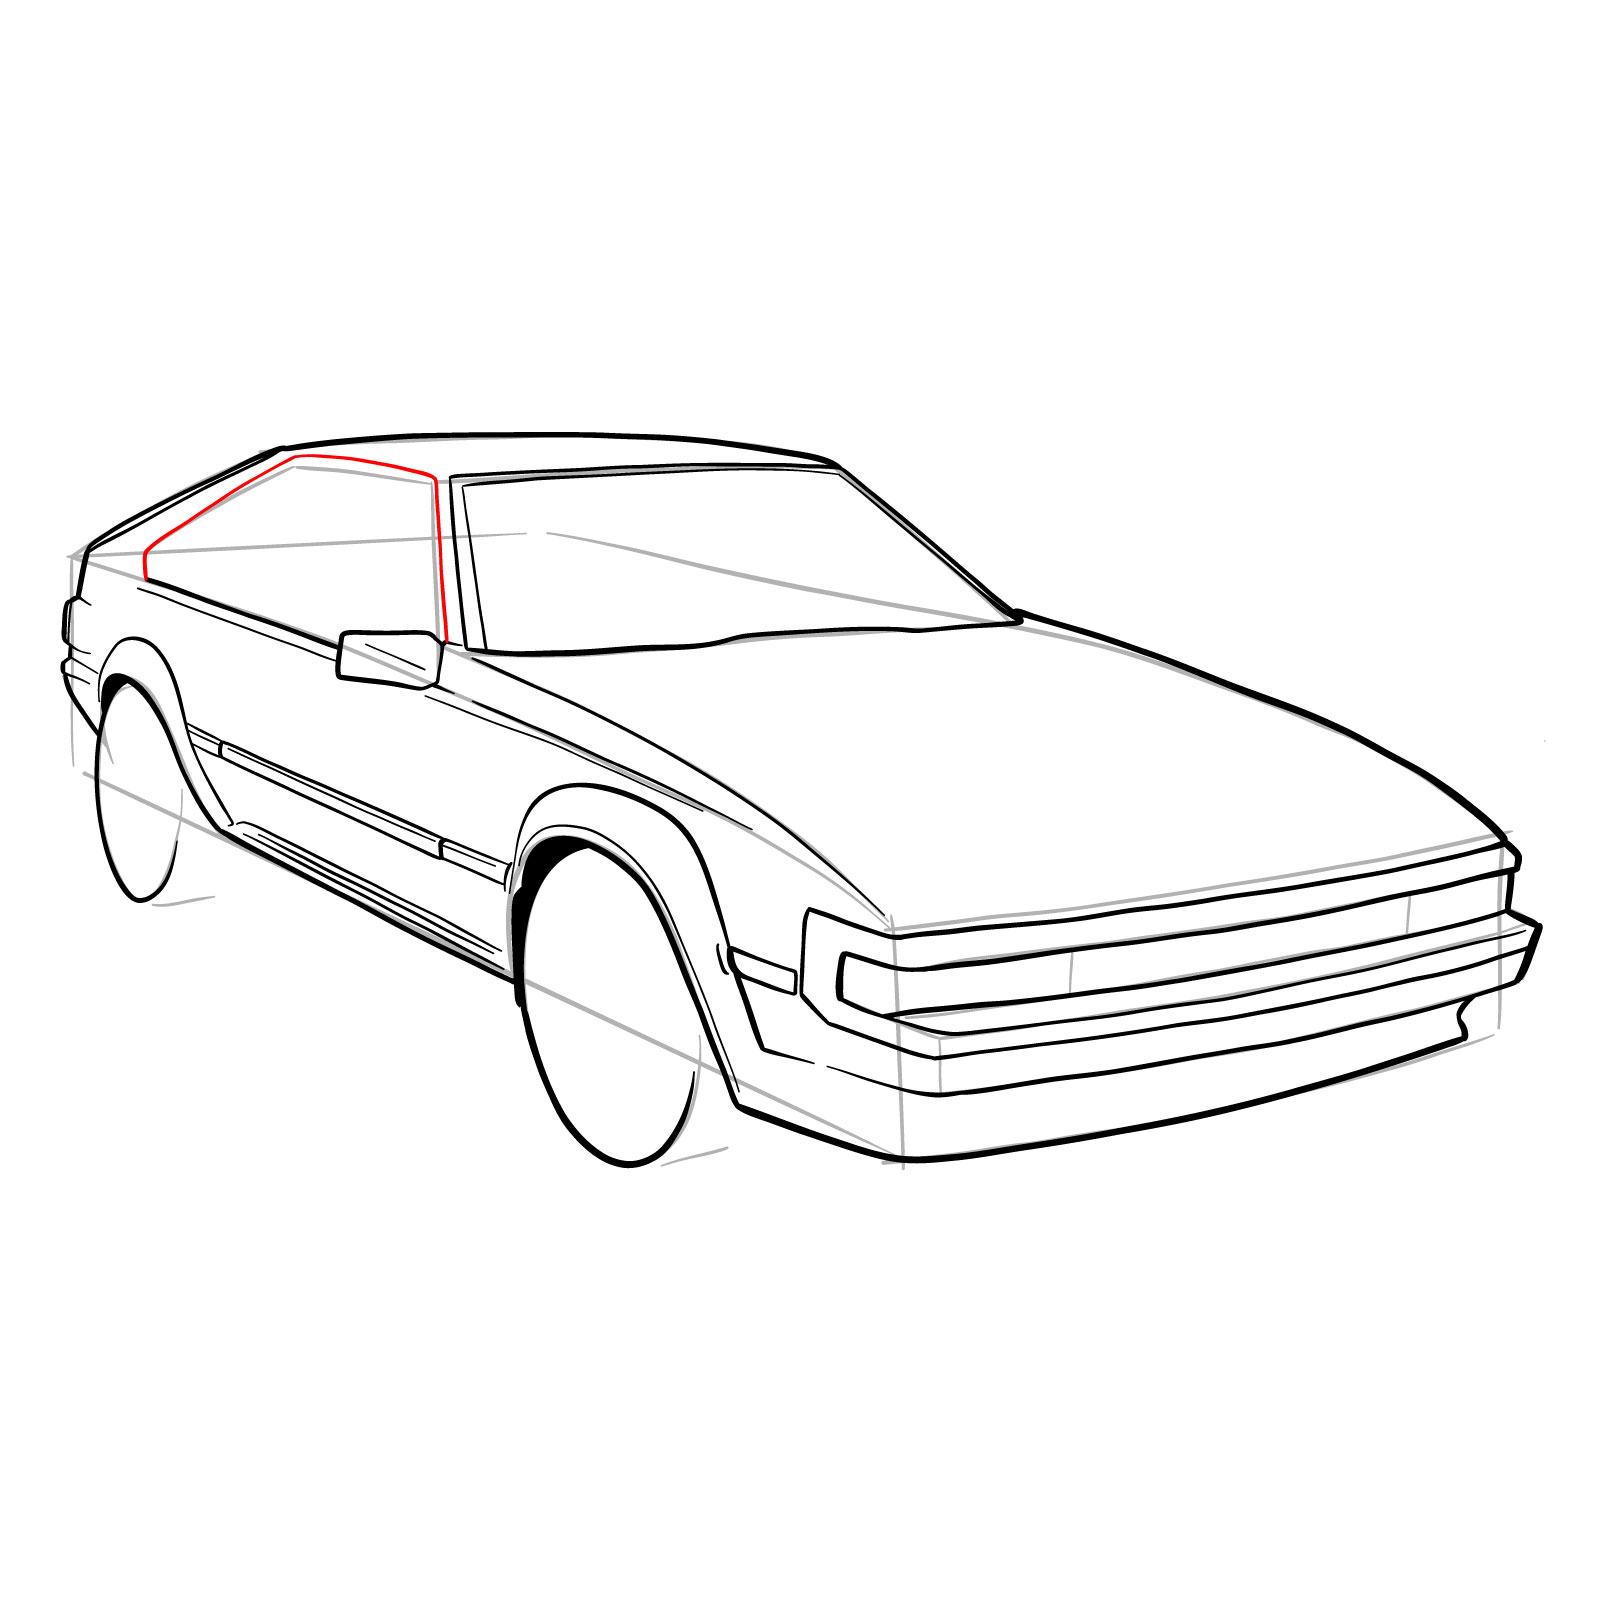 How to draw a 1985 Toyota Celica Supra P Type MK 2 - step 23